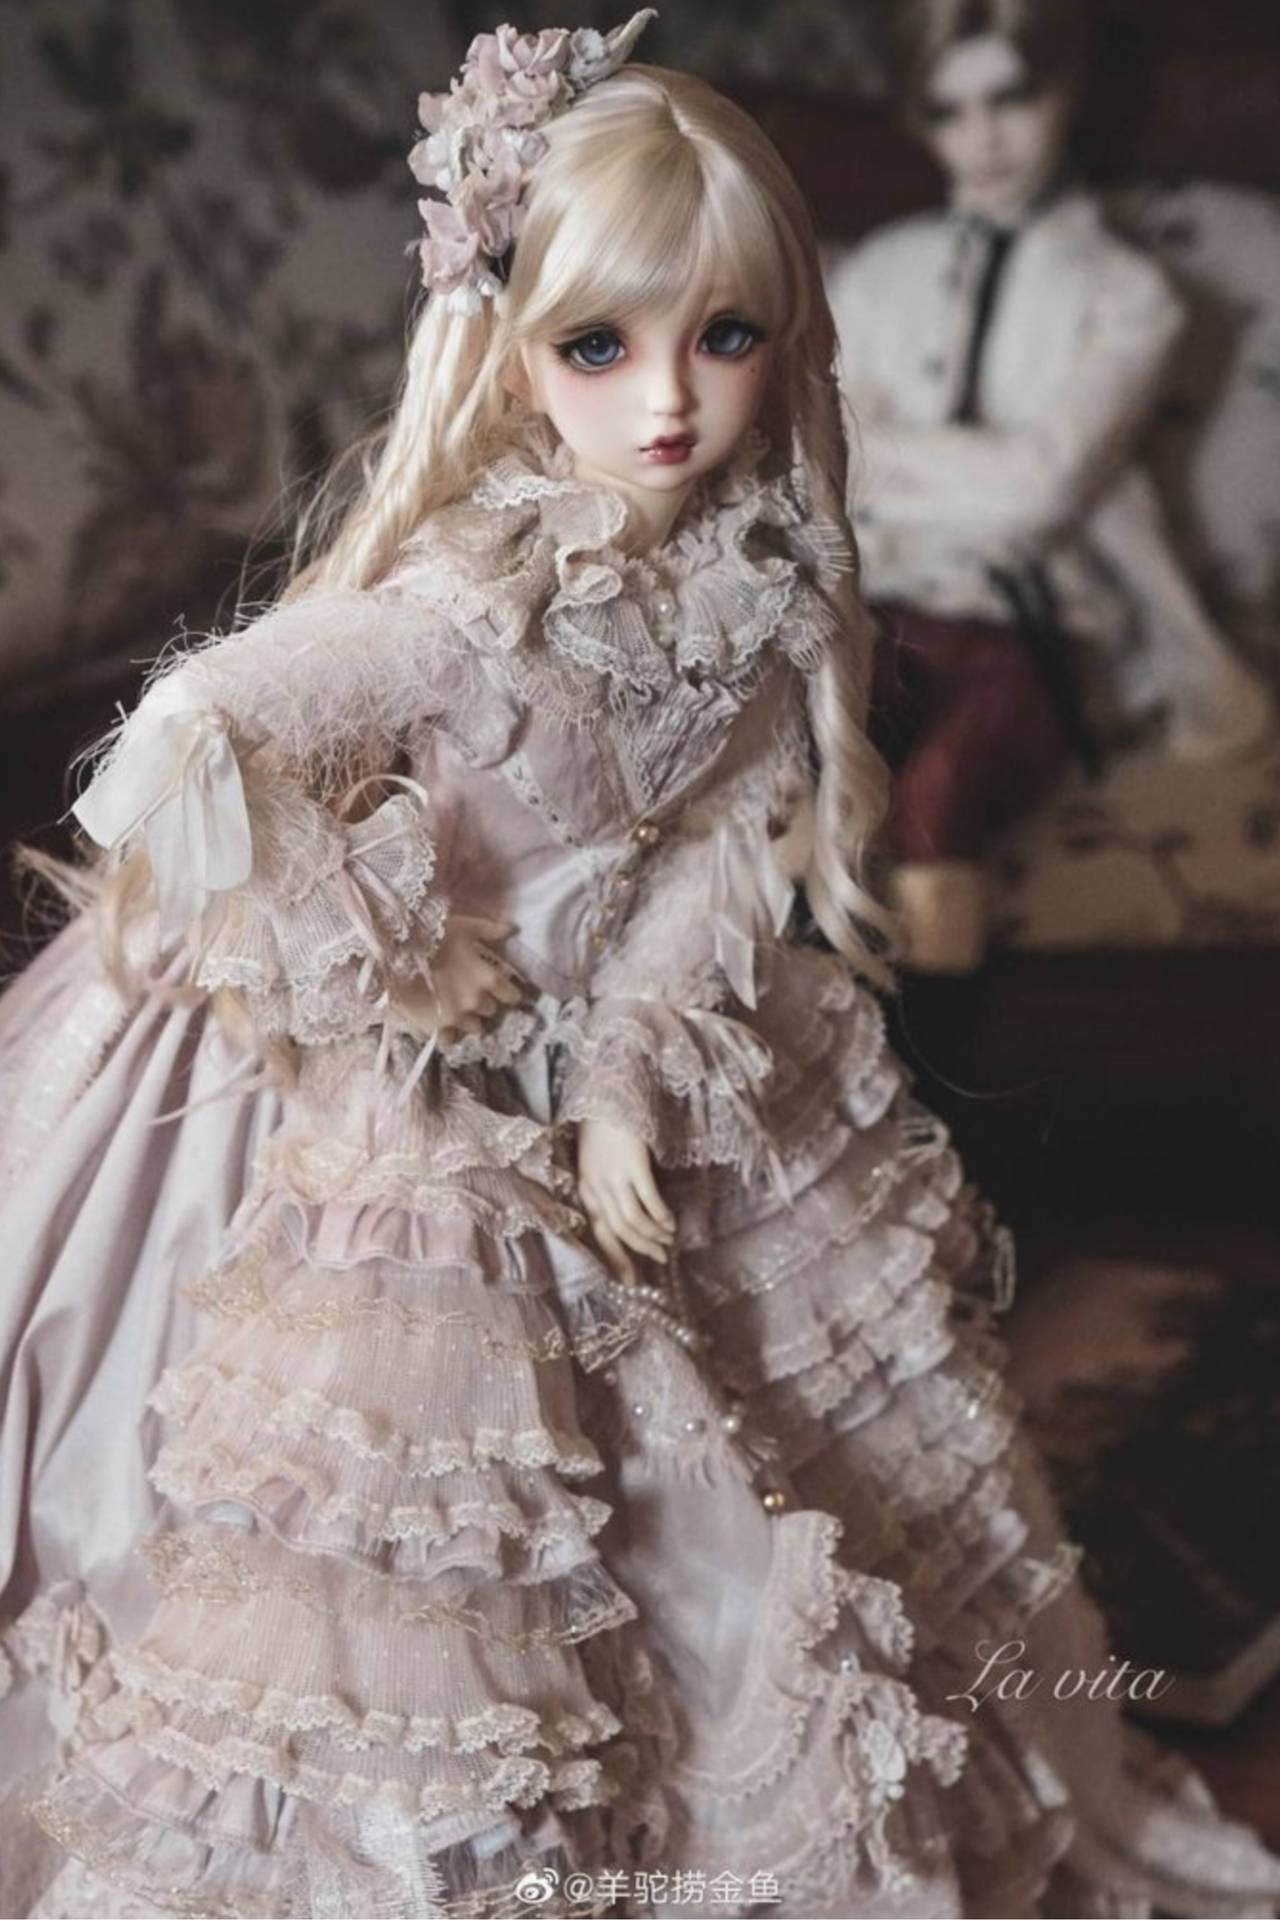 Caption: Elegant European Ball Gown On Barbie Doll Background